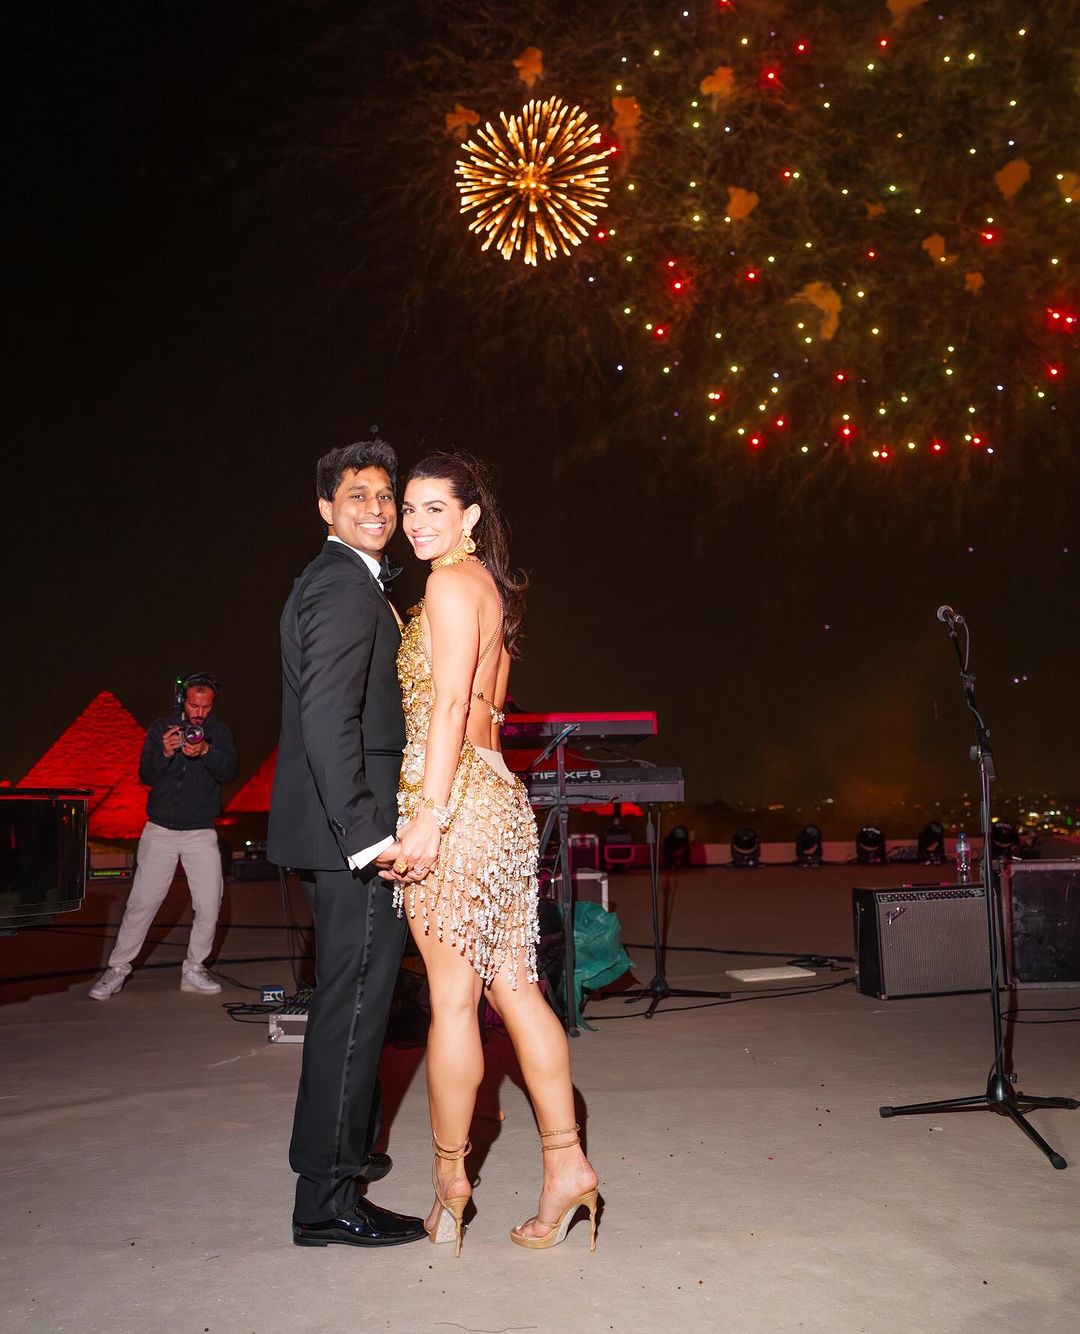 Ankur Jain and Erika Hammond’s wedding celebrations in Egypt